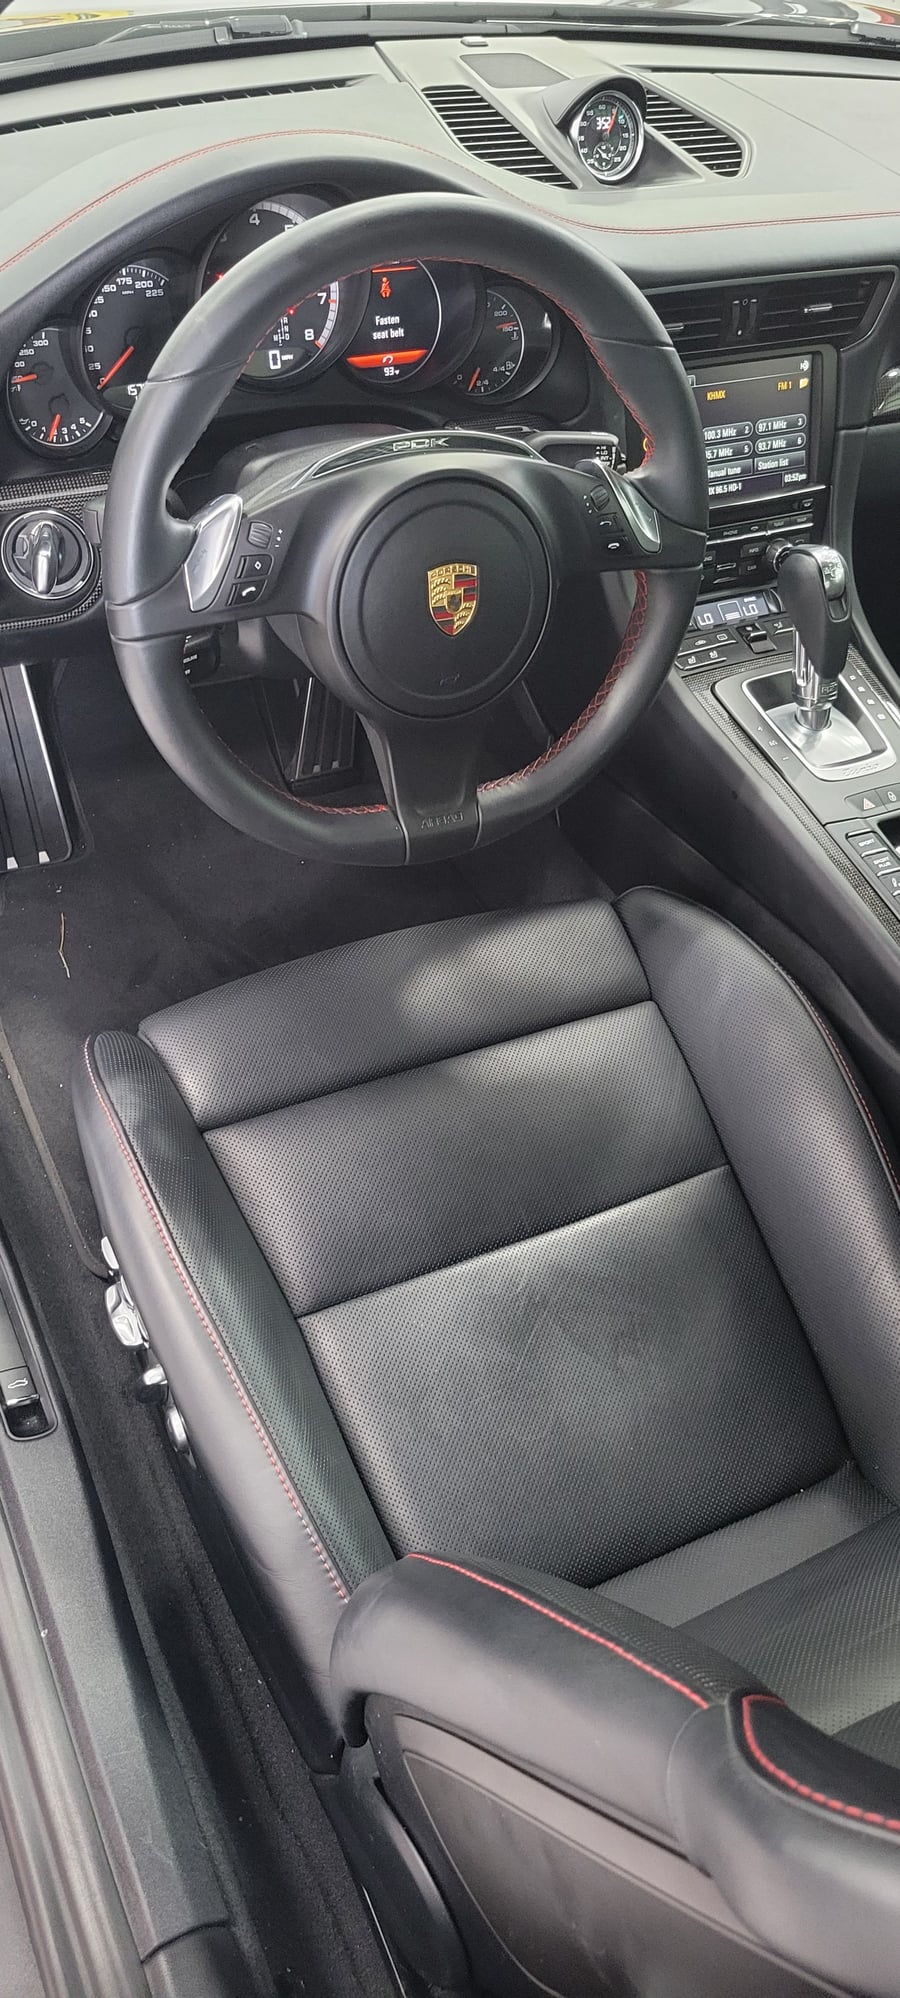 2015 Porsche 911 - 2015 Porsche 911 Turbo S , 15k miles , - Used - VIN Wp0ad2a90fs166694 - 15,600 Miles - 6 cyl - AWD - Automatic - Coupe - Black - Houston, TX 77388, United States